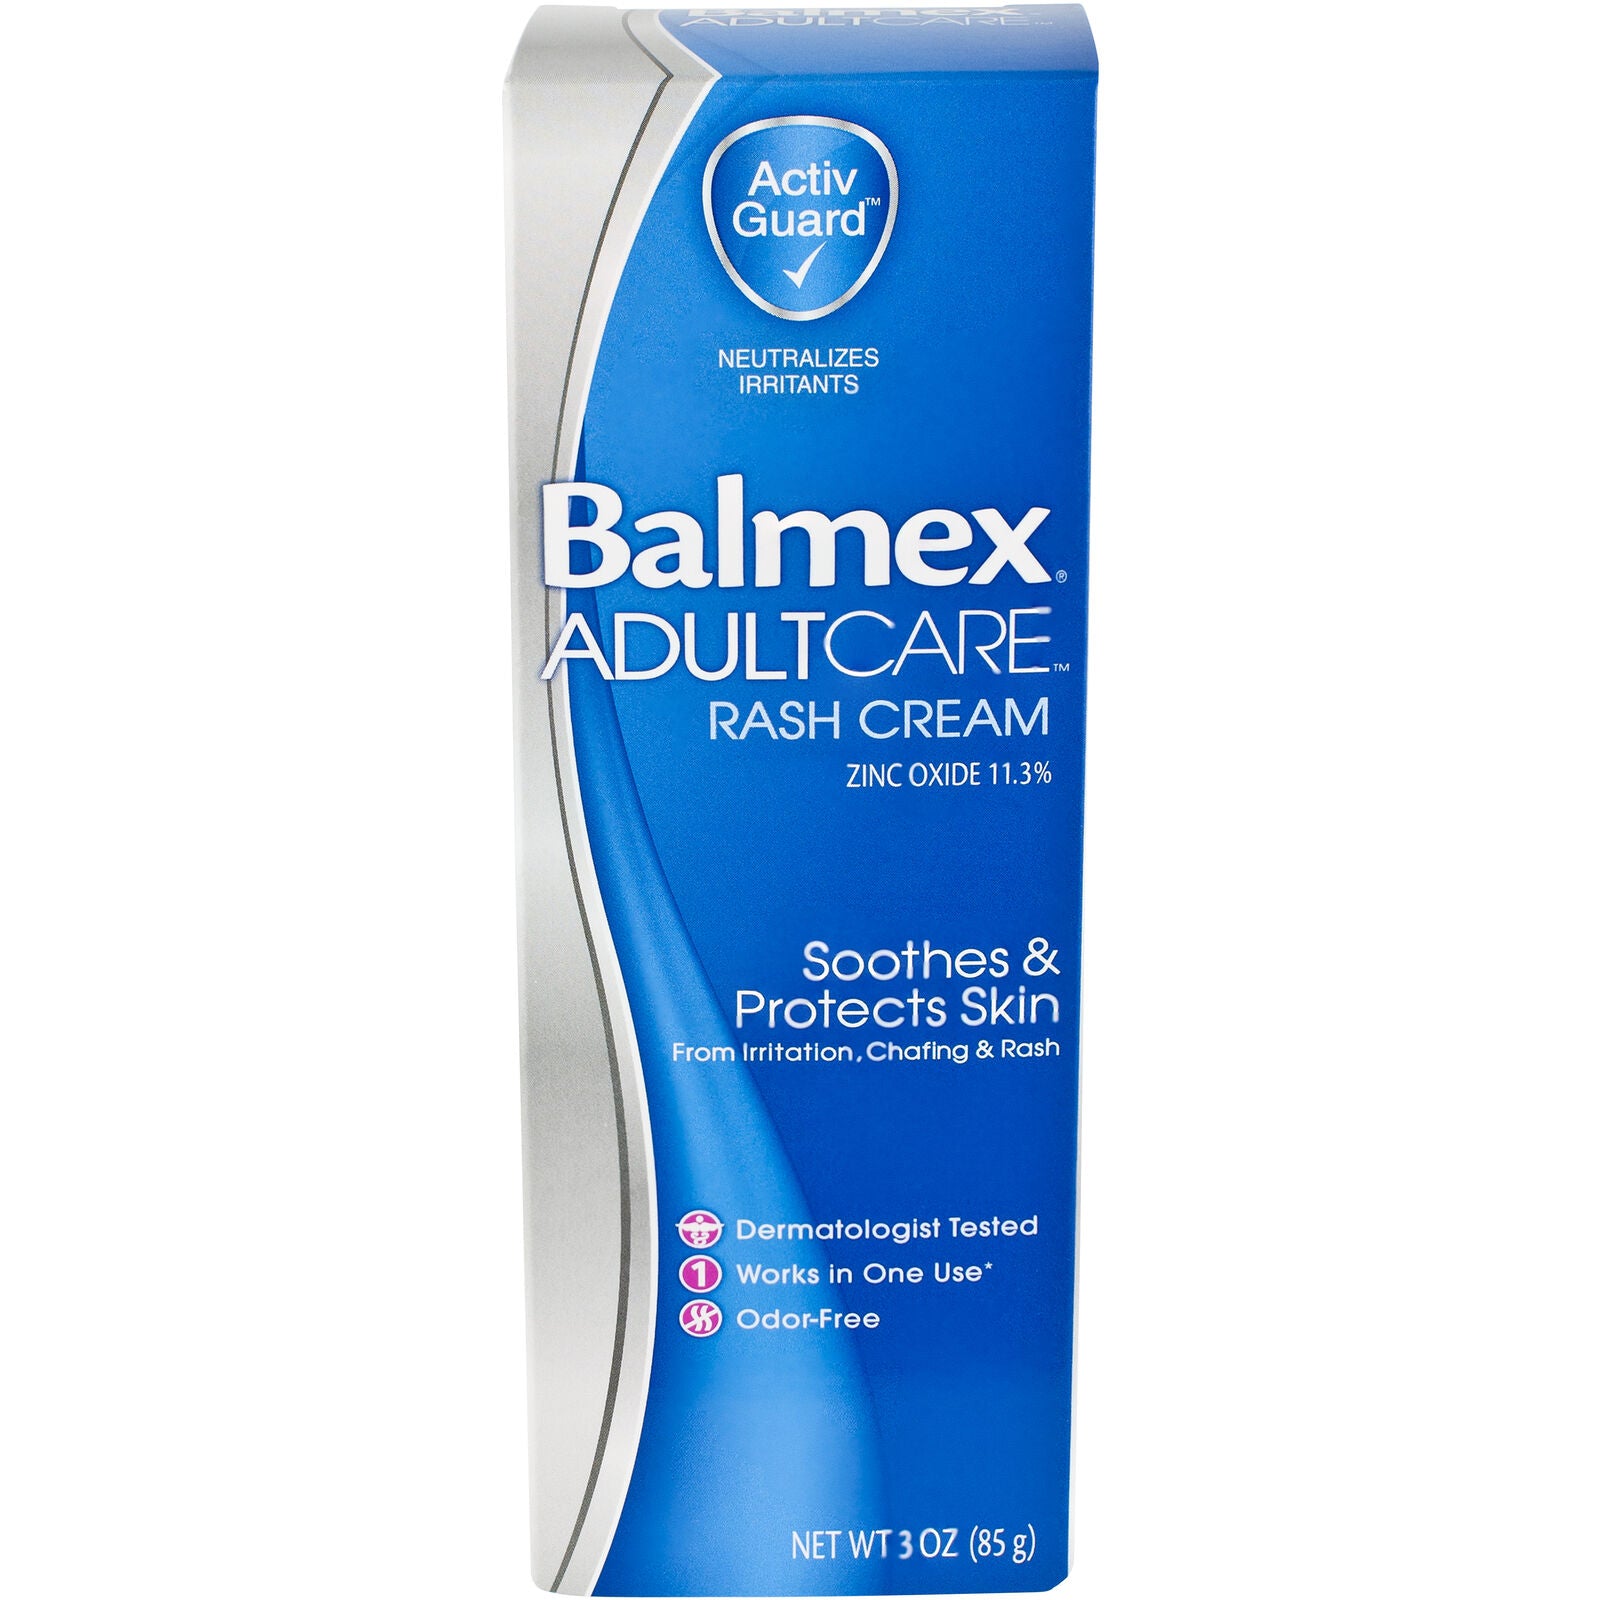 Balmex Adult Care Rash Cream Zinc Oxide 11.3% Soothe Protect Skin Odor Free 3oz